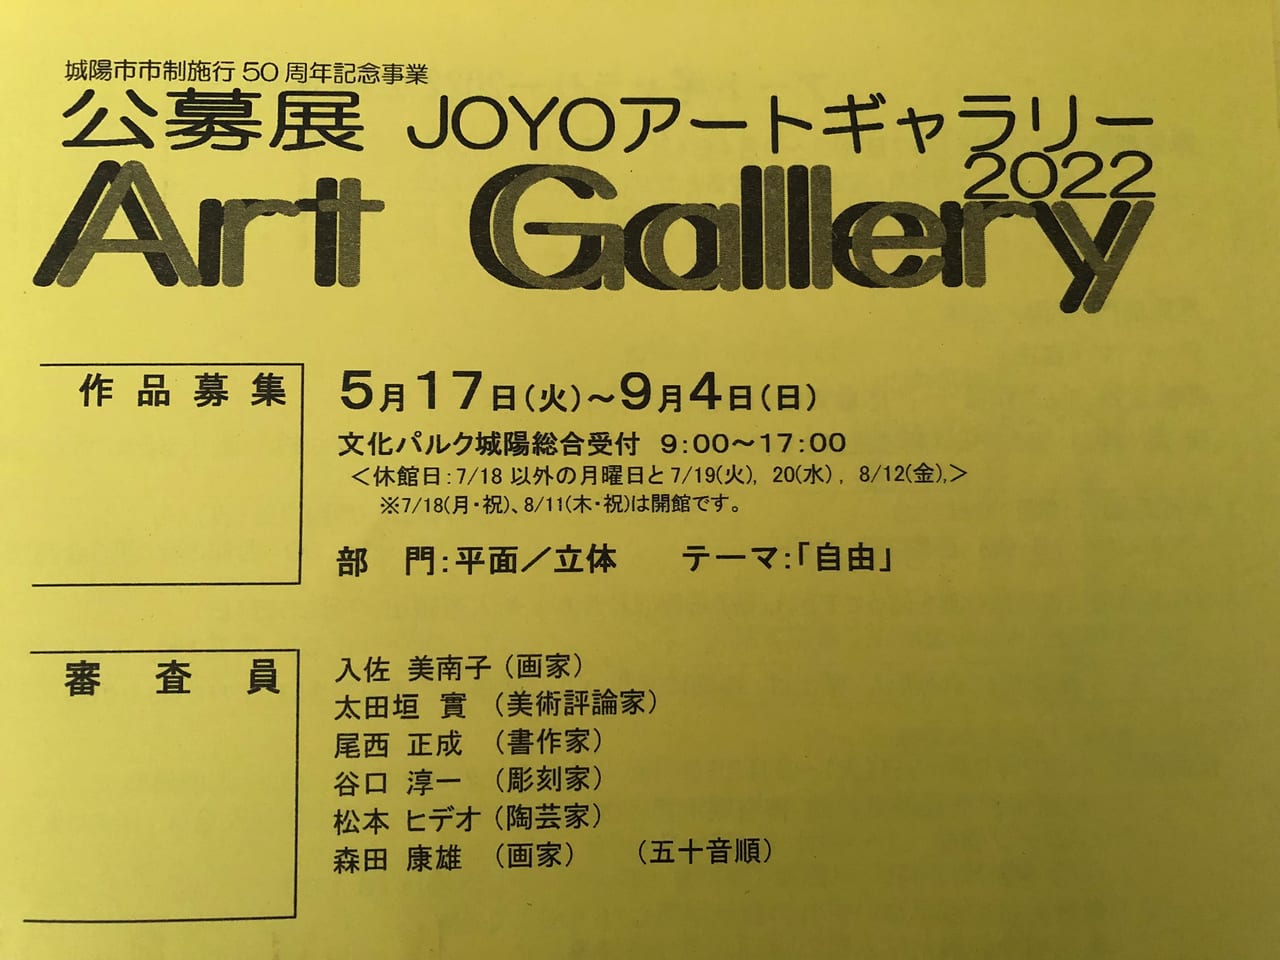 JOYO ART GALLERY 2022